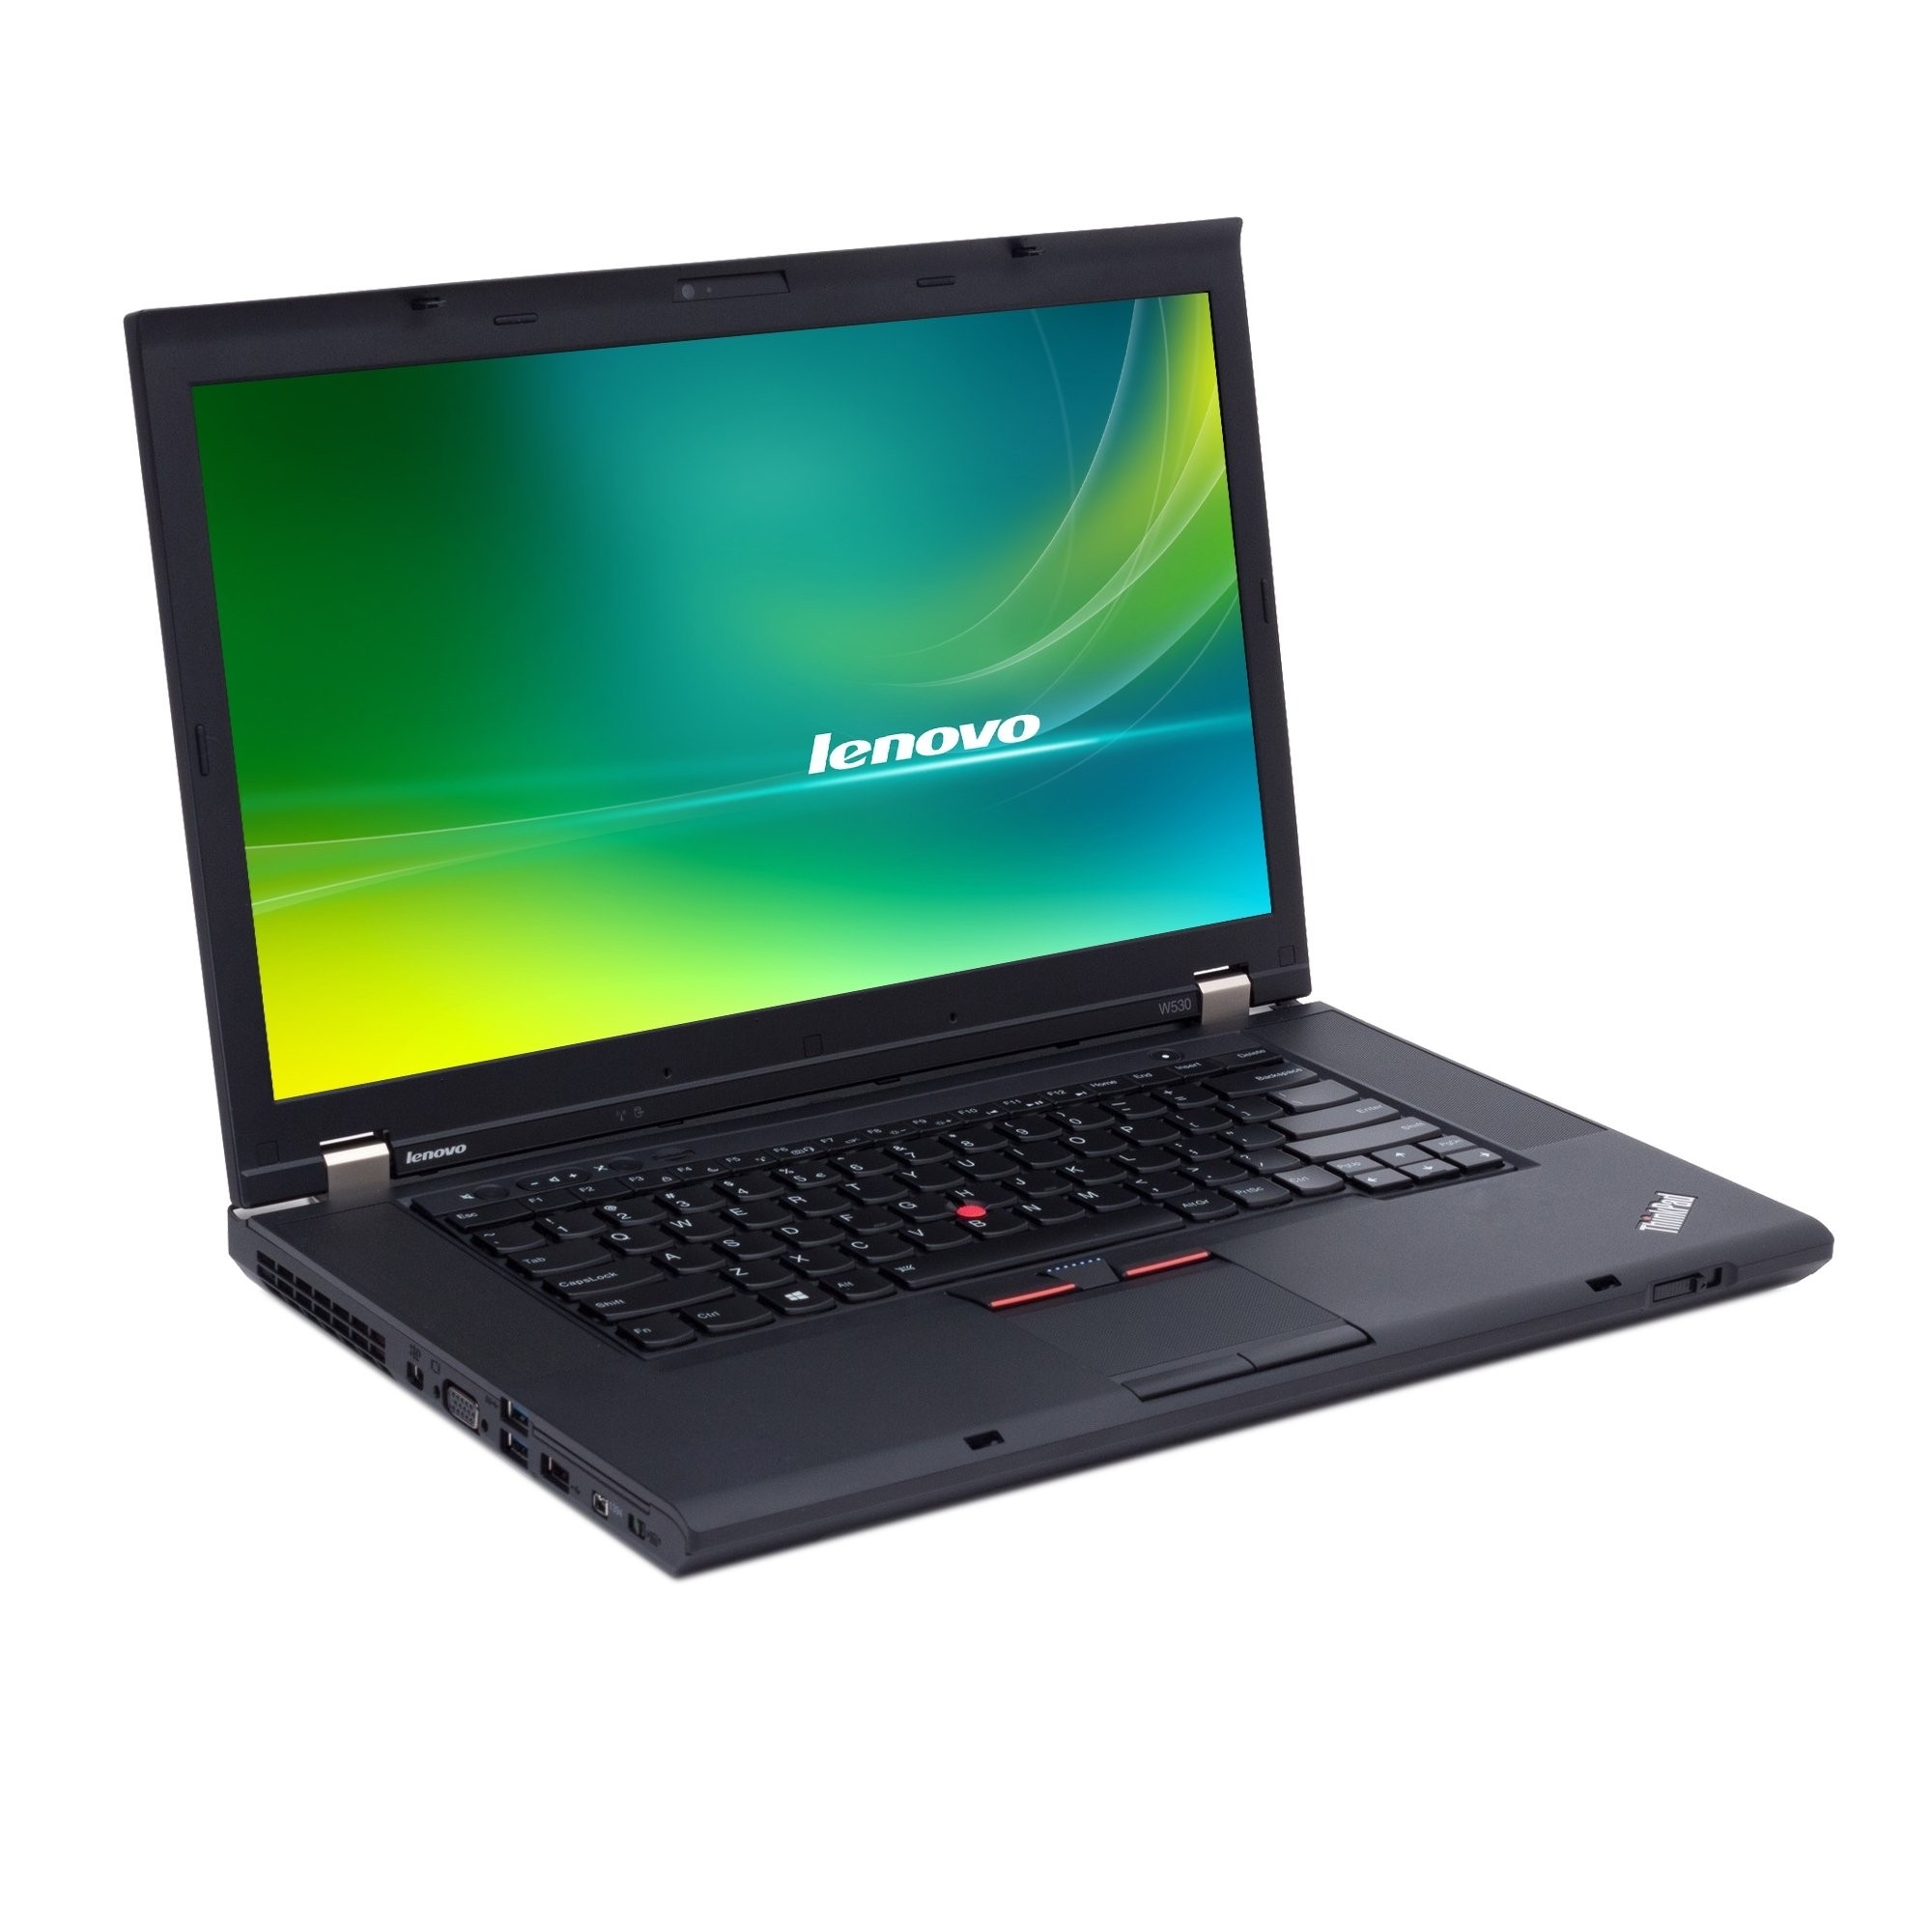 Lenovo ThinkPad W530 15.6" Laptop (US Keyboard)